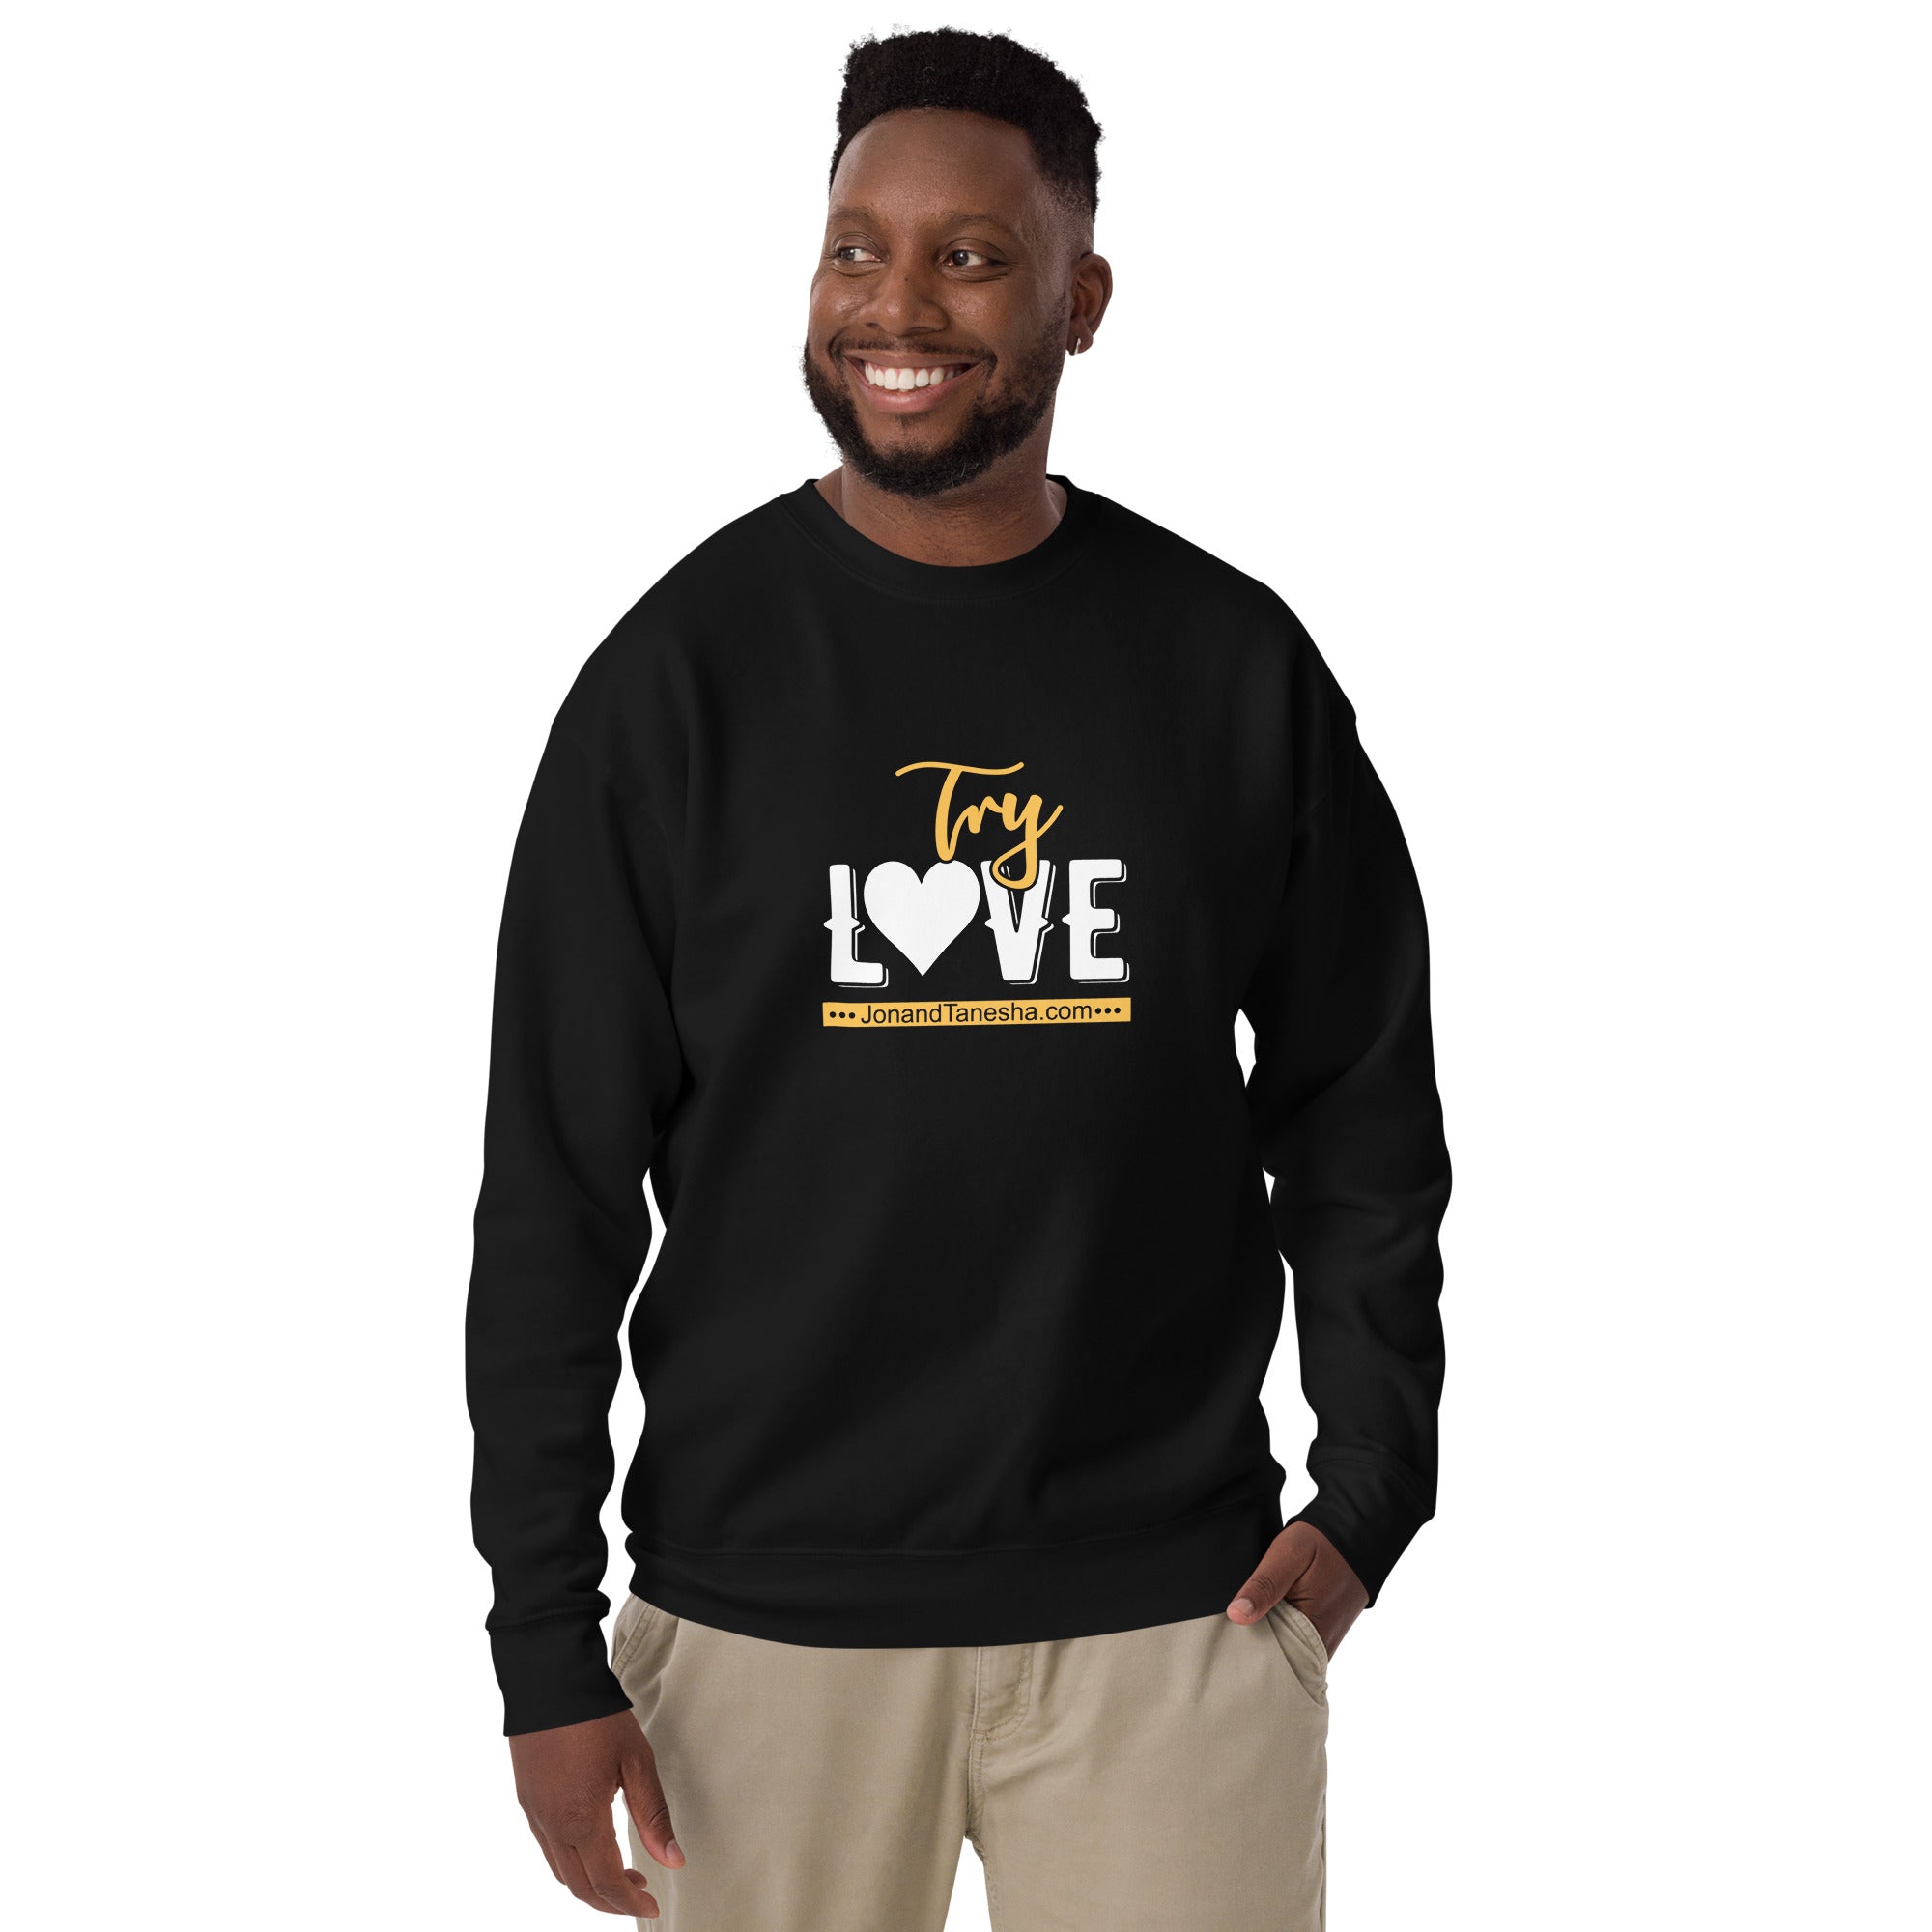 "Try Love" sweatshirt (multiple colors)